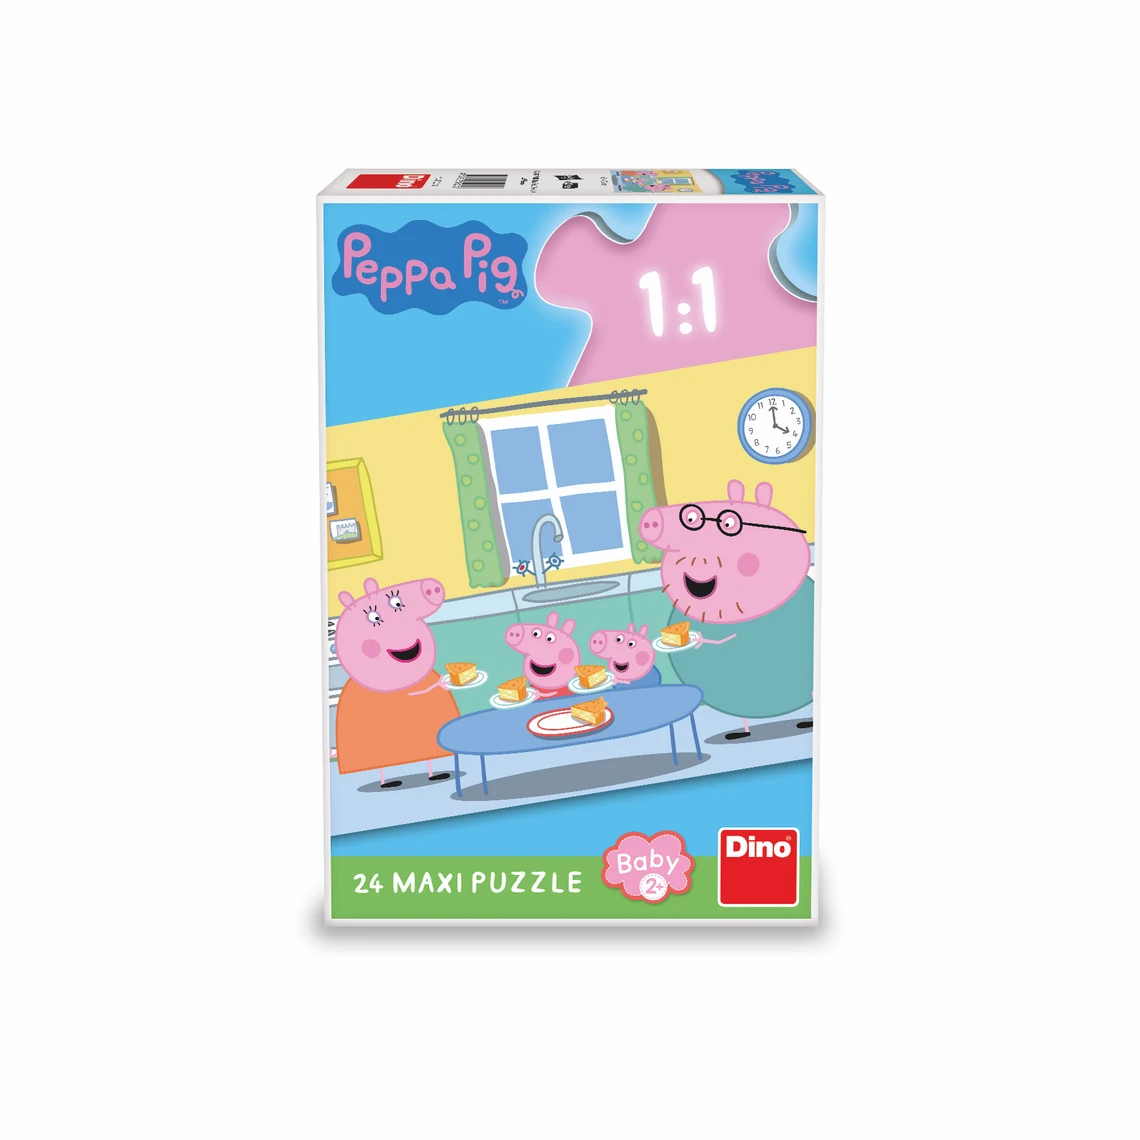 Puzzle Peppa Pig: Oběd 24 dílků maxi - slide 1